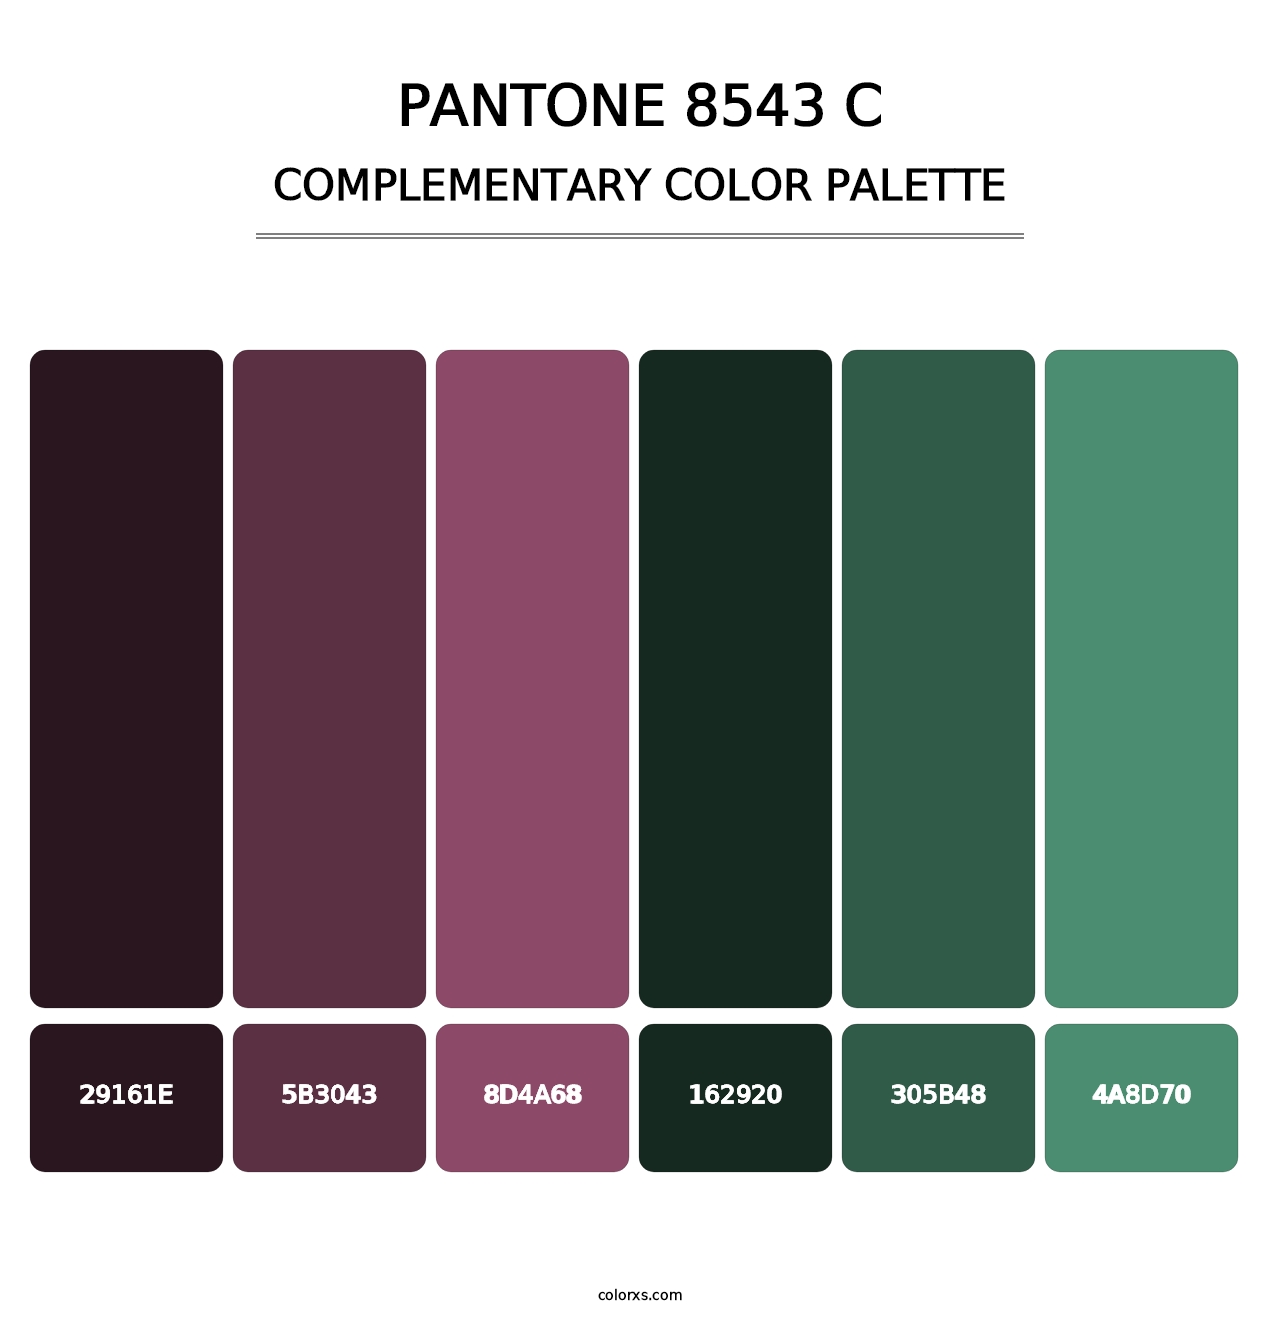 PANTONE 8543 C - Complementary Color Palette